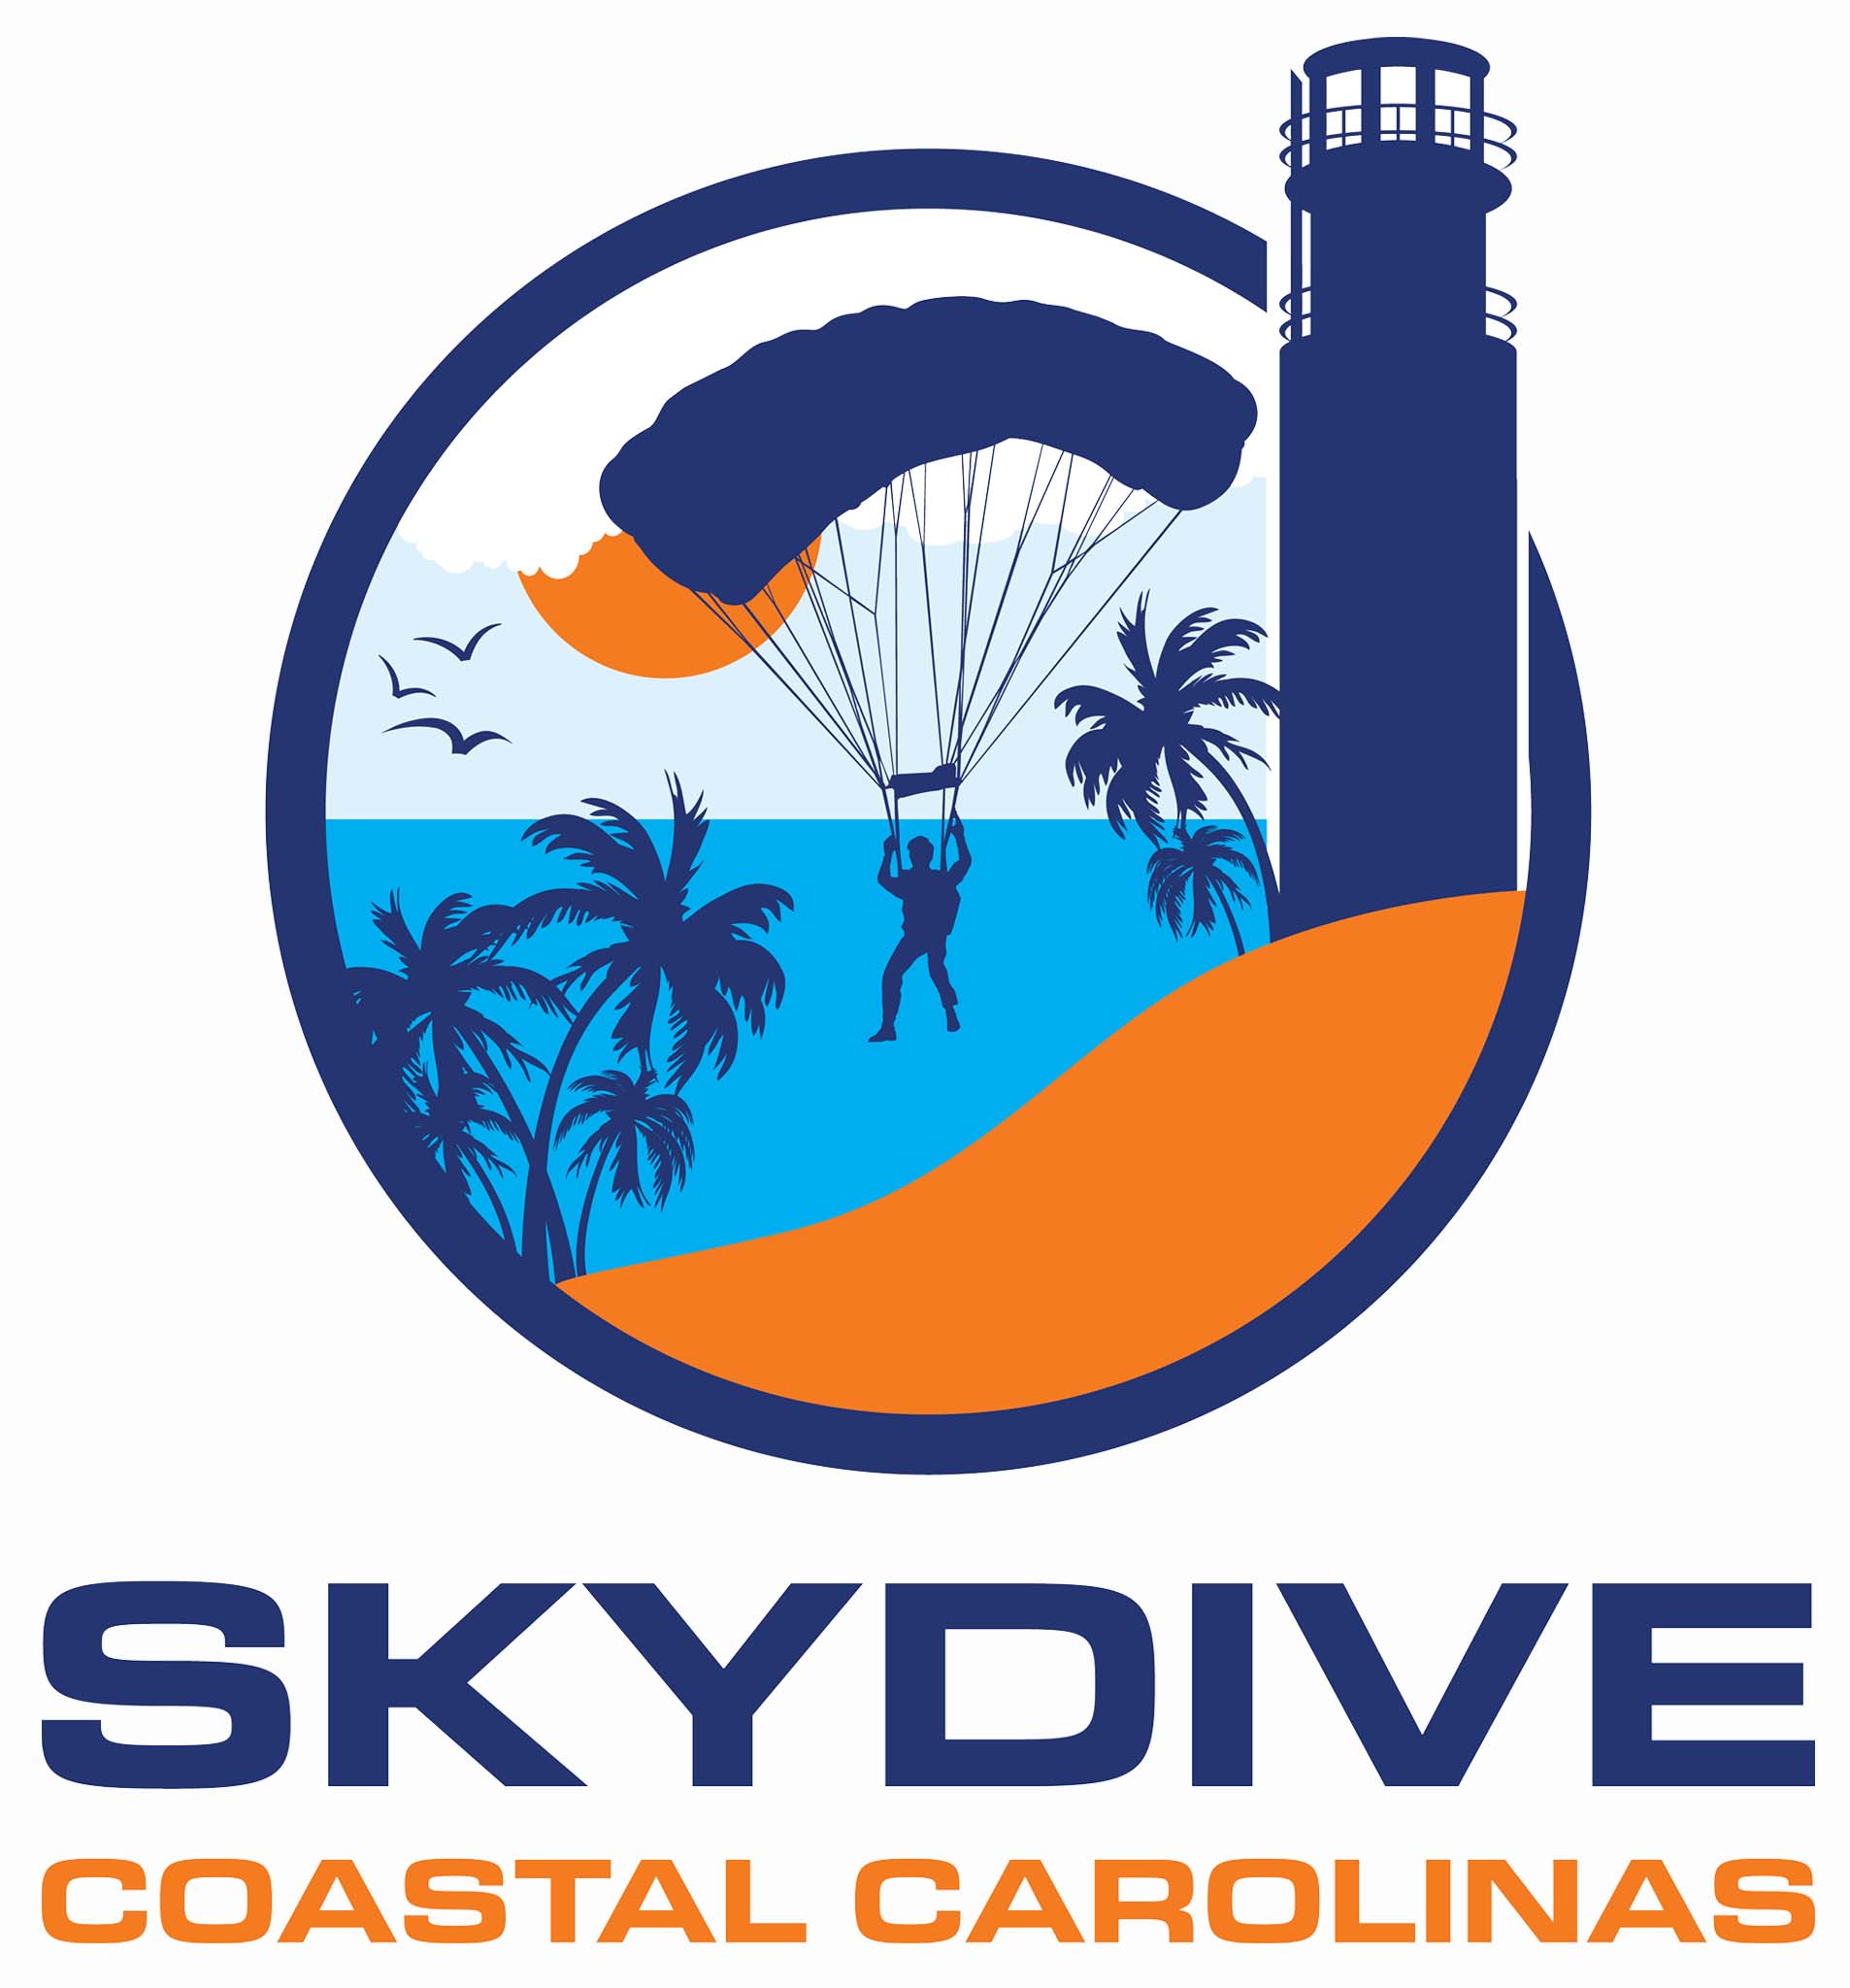 Skydive Coastal Carolinas logo